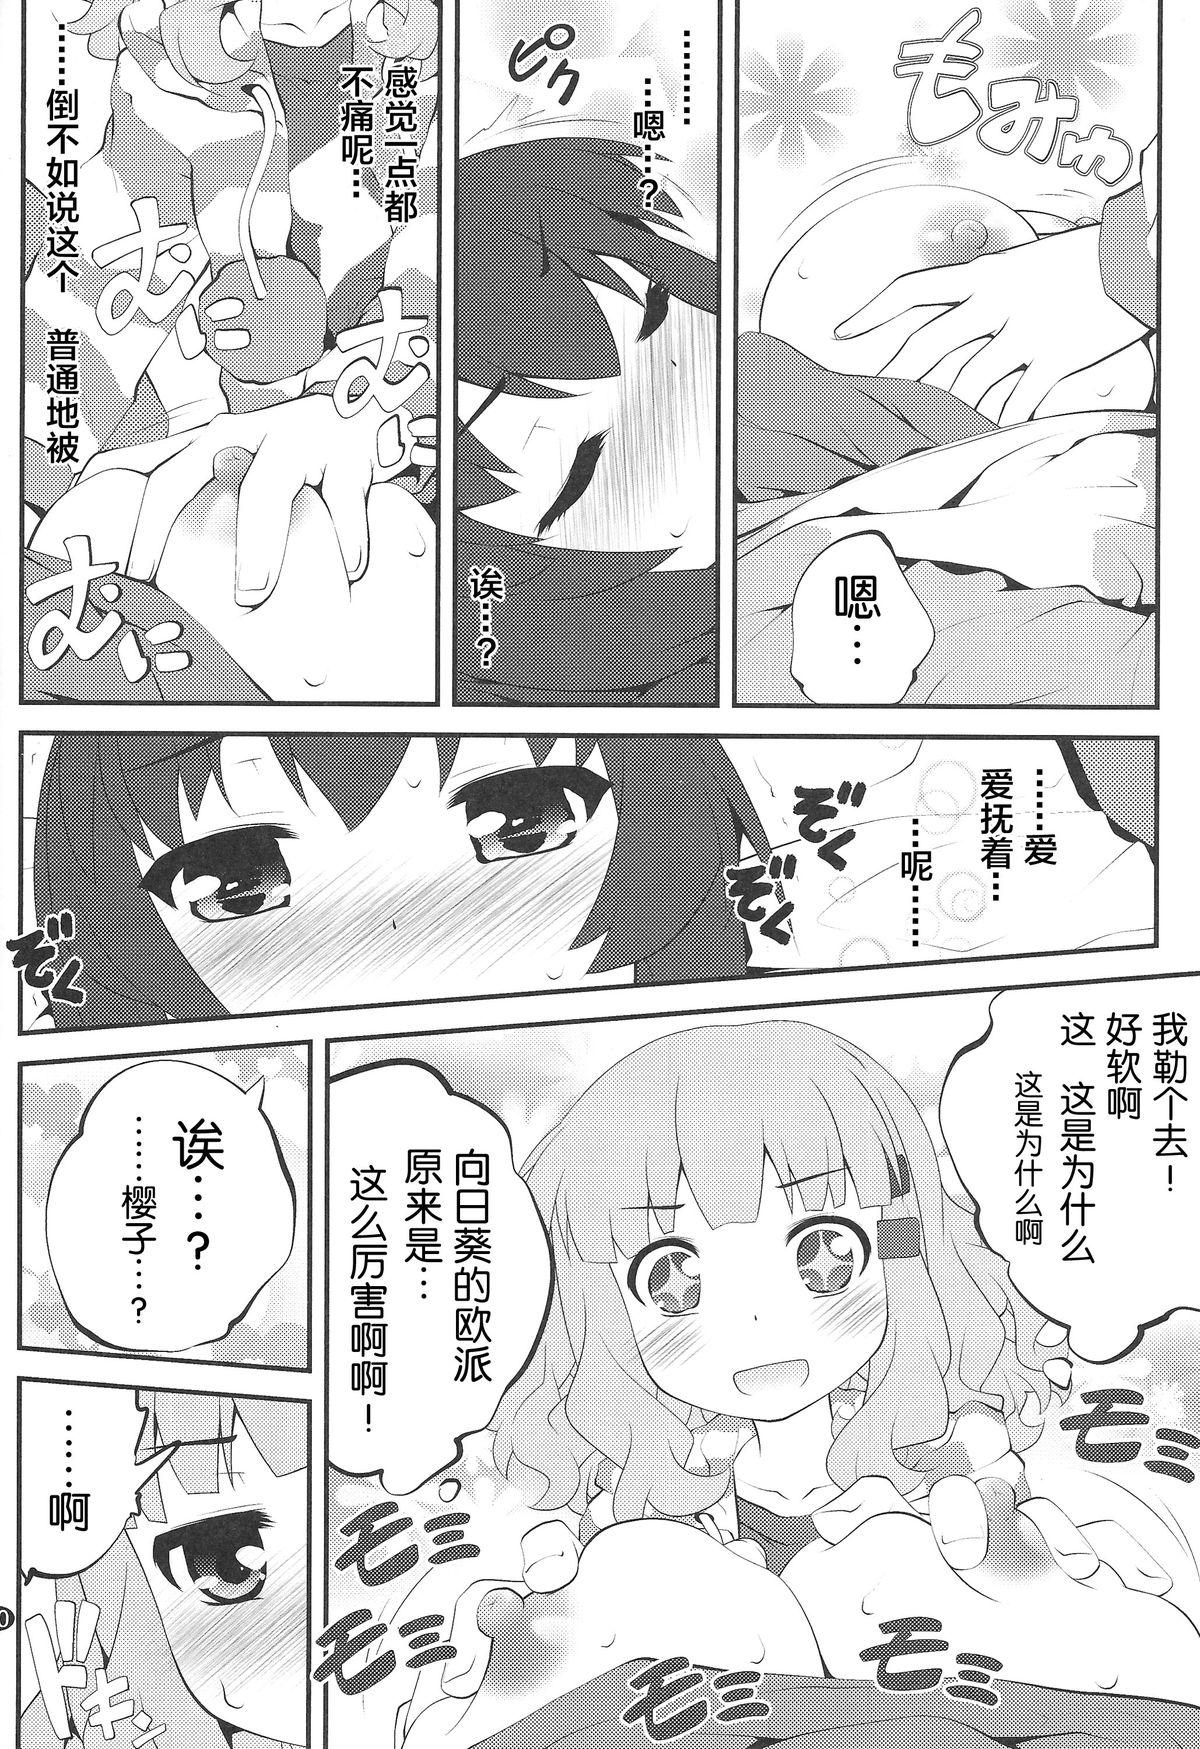 Gemendo Himegoto Flowers 7 - Yuruyuri Hard - Page 10